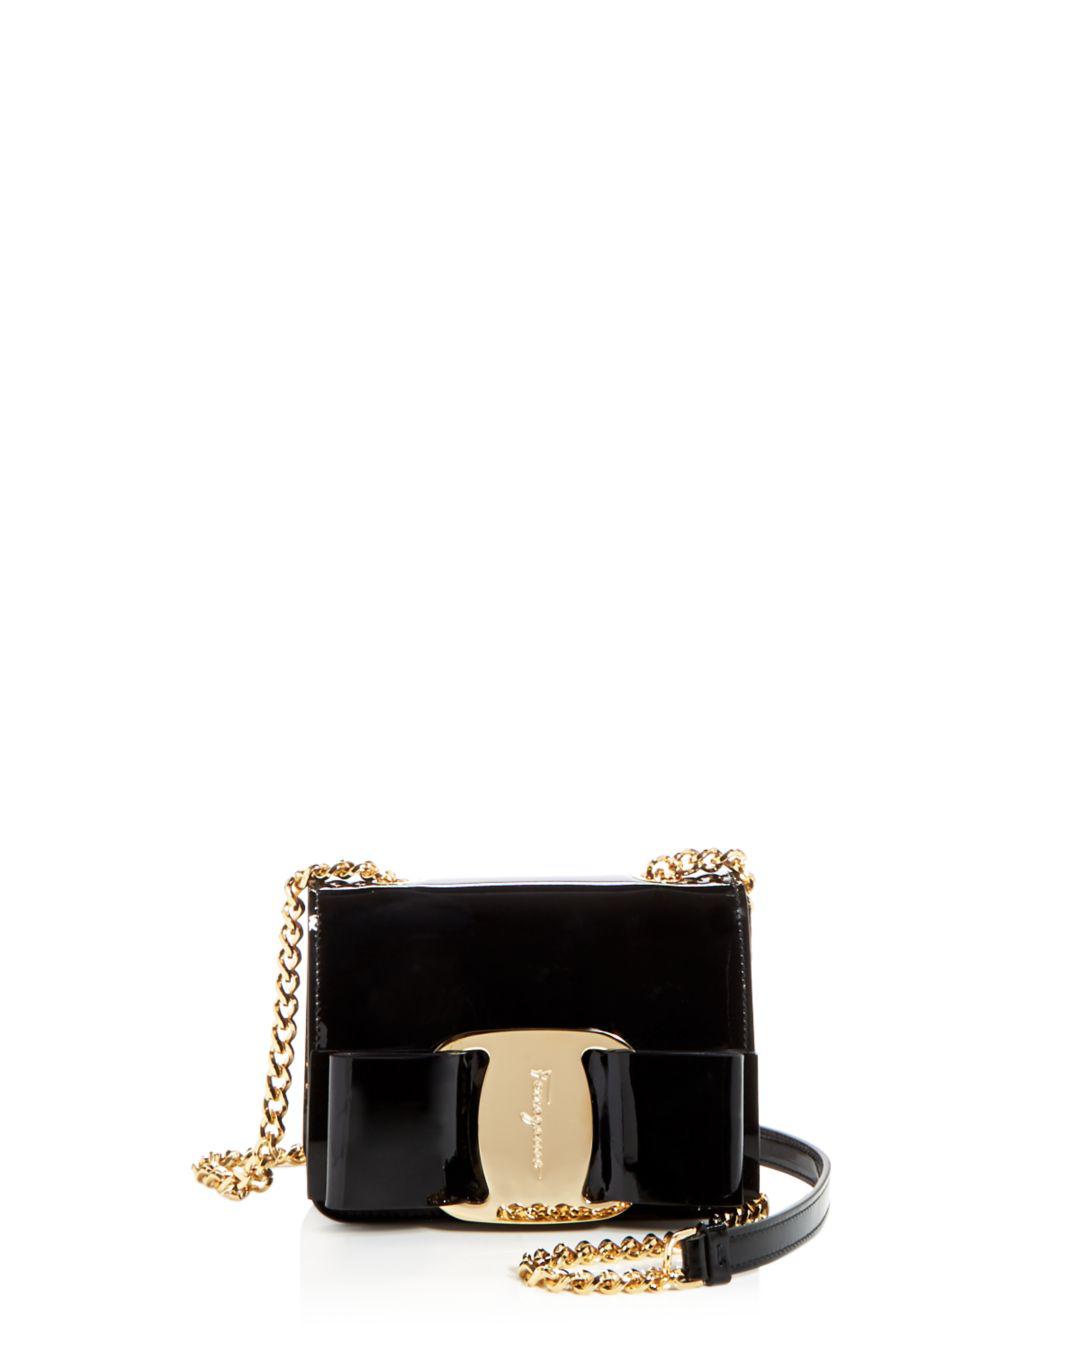 Ferragamo Leather Oversized Vara Bow Mini Bag in Nero Black/Gold (Black) -  Lyst